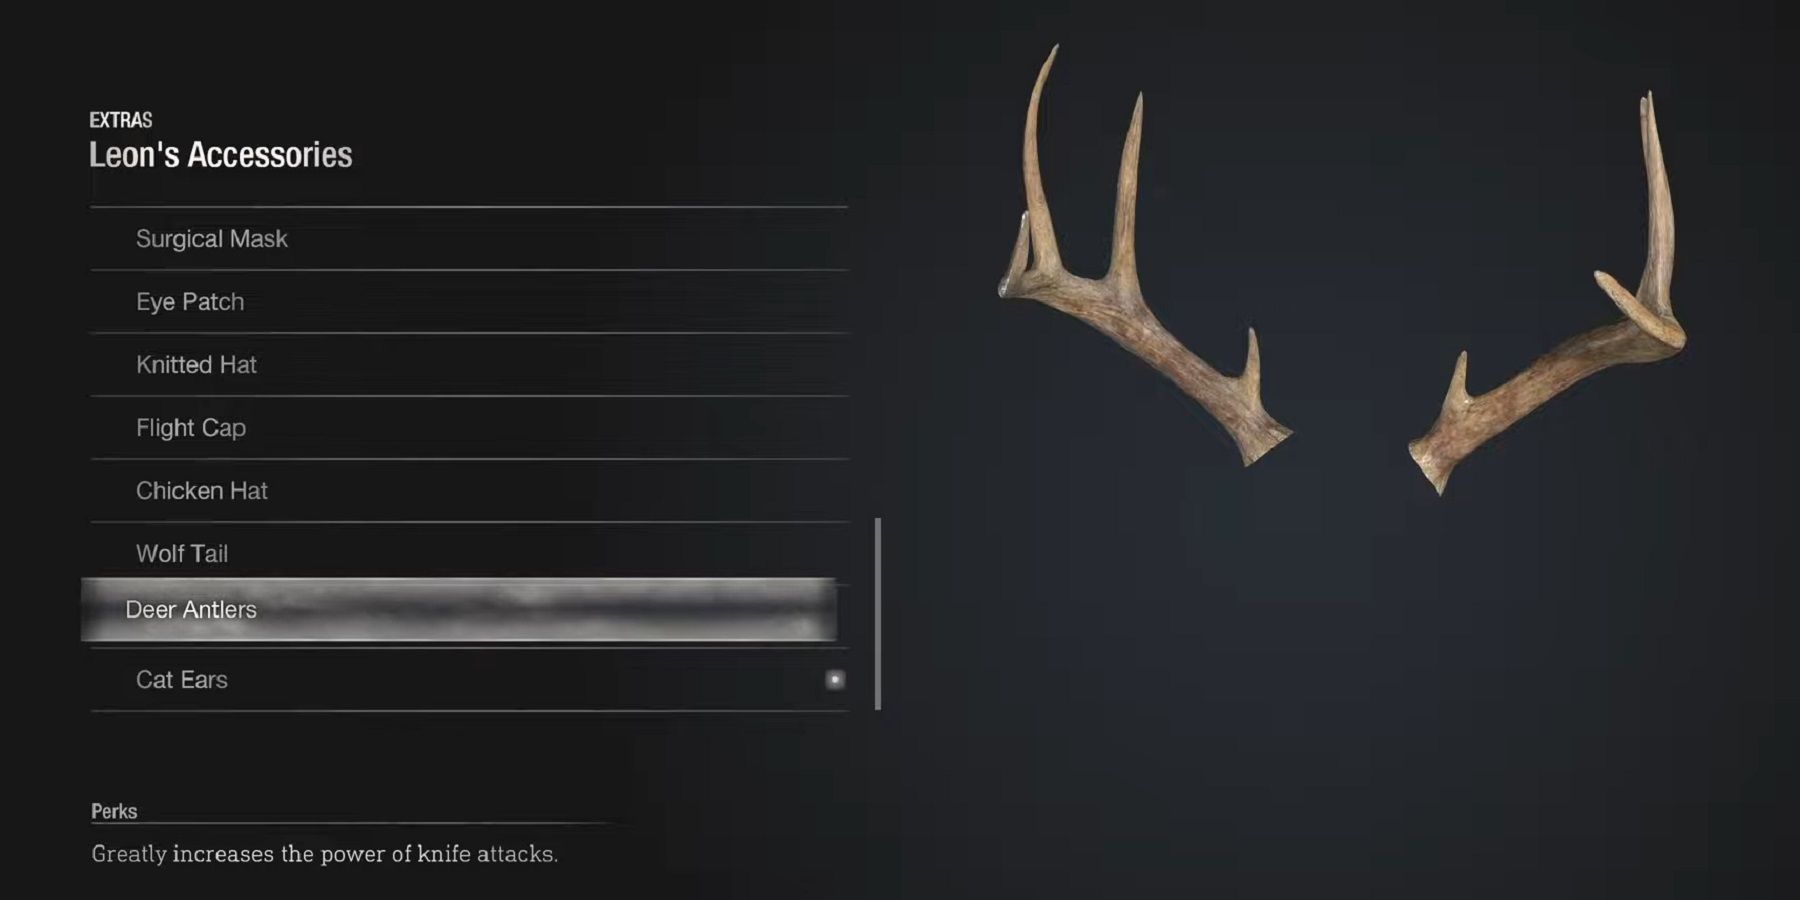 Deer Antlers from Resident Evil 4 Remake.